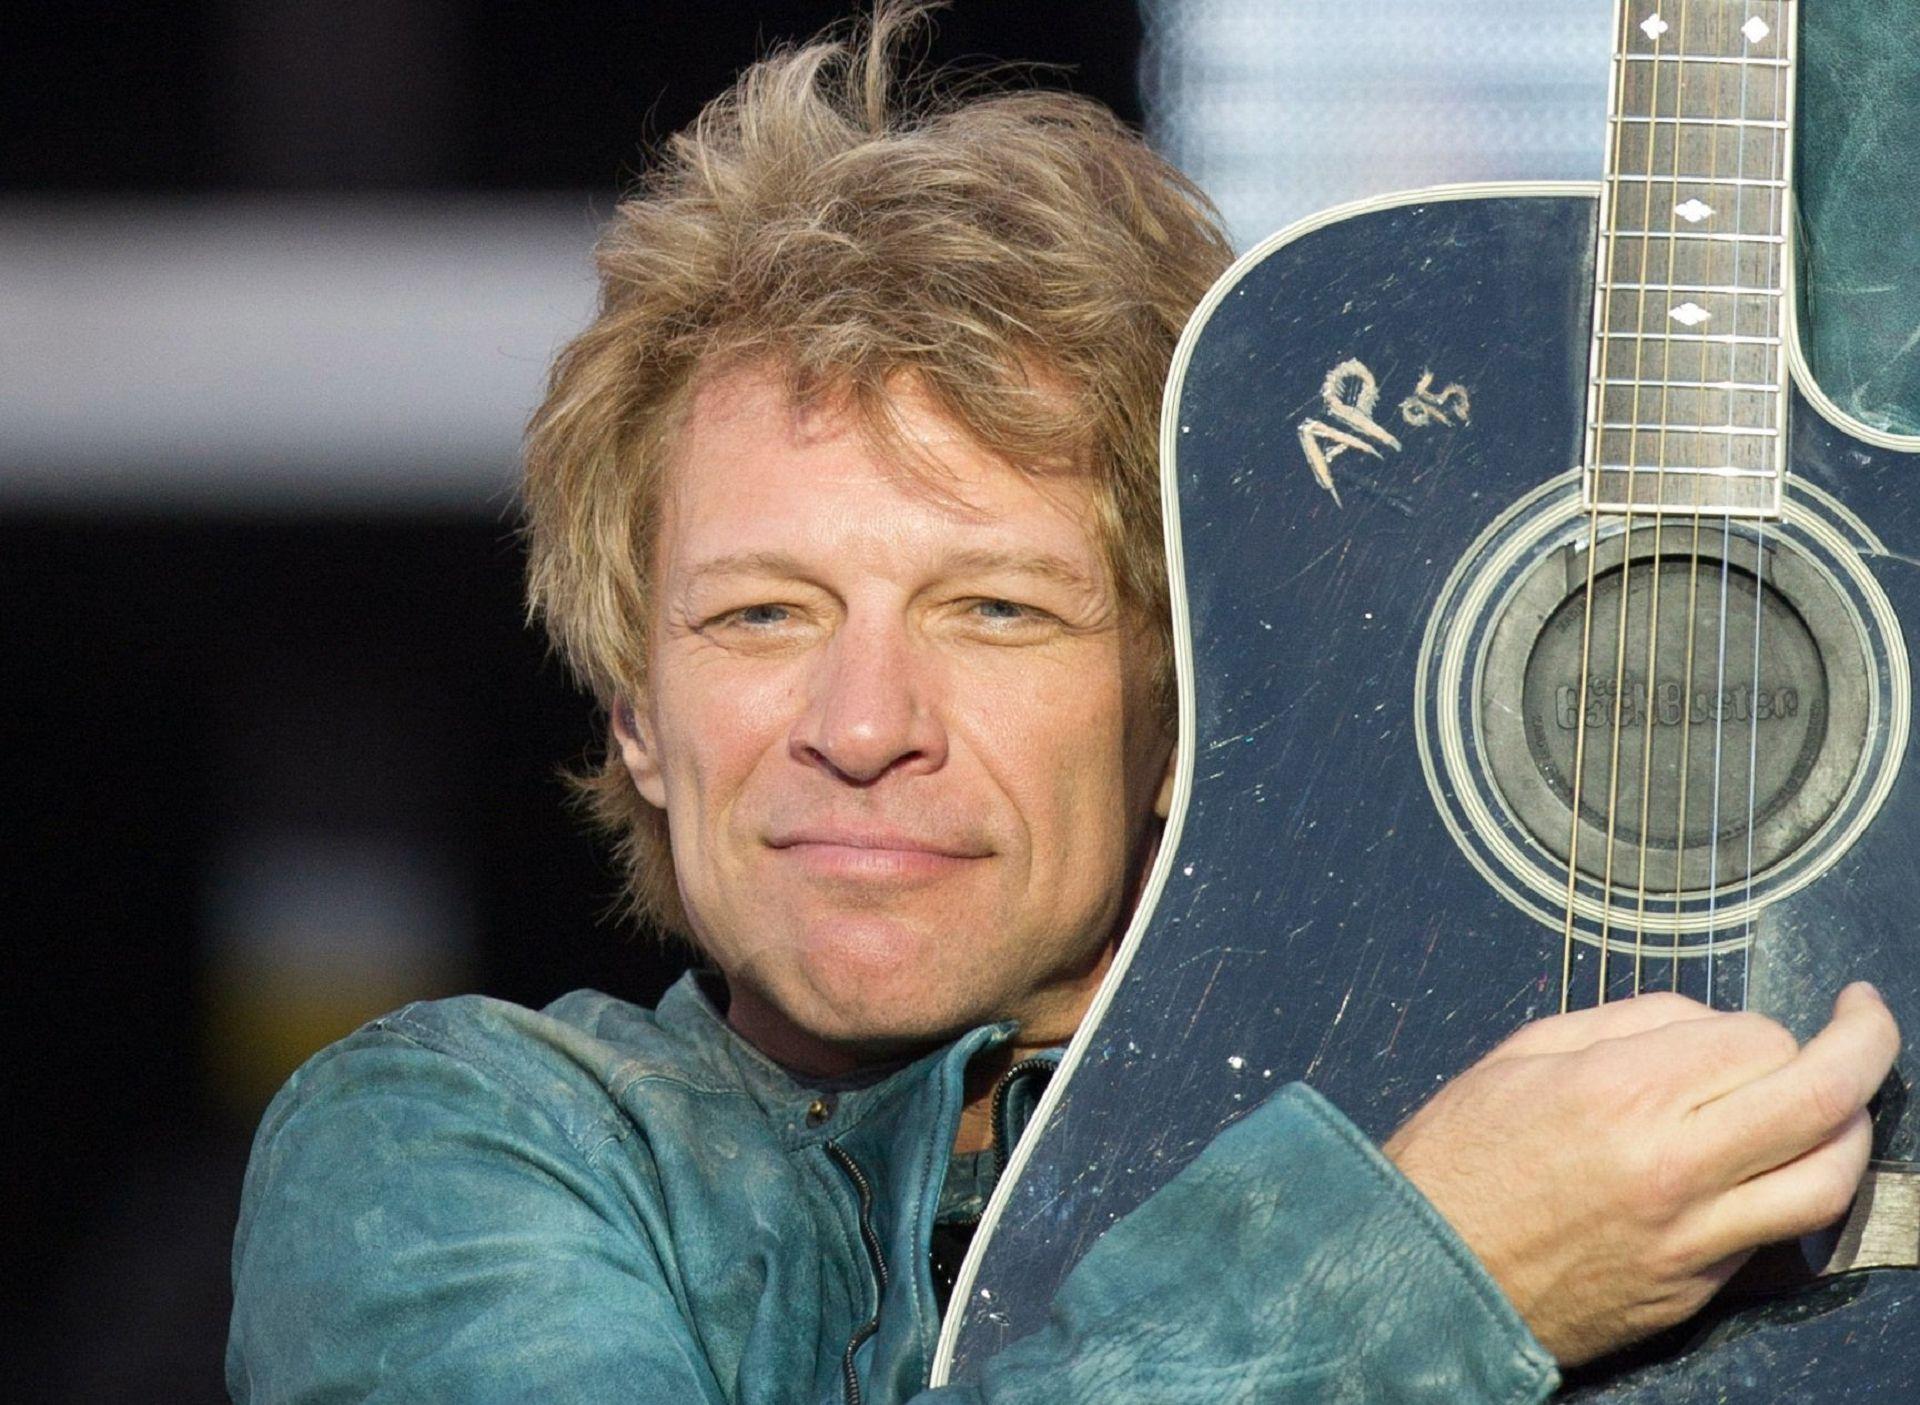 Jon Bon Jovi Wallpaper Image Photo Picture Background